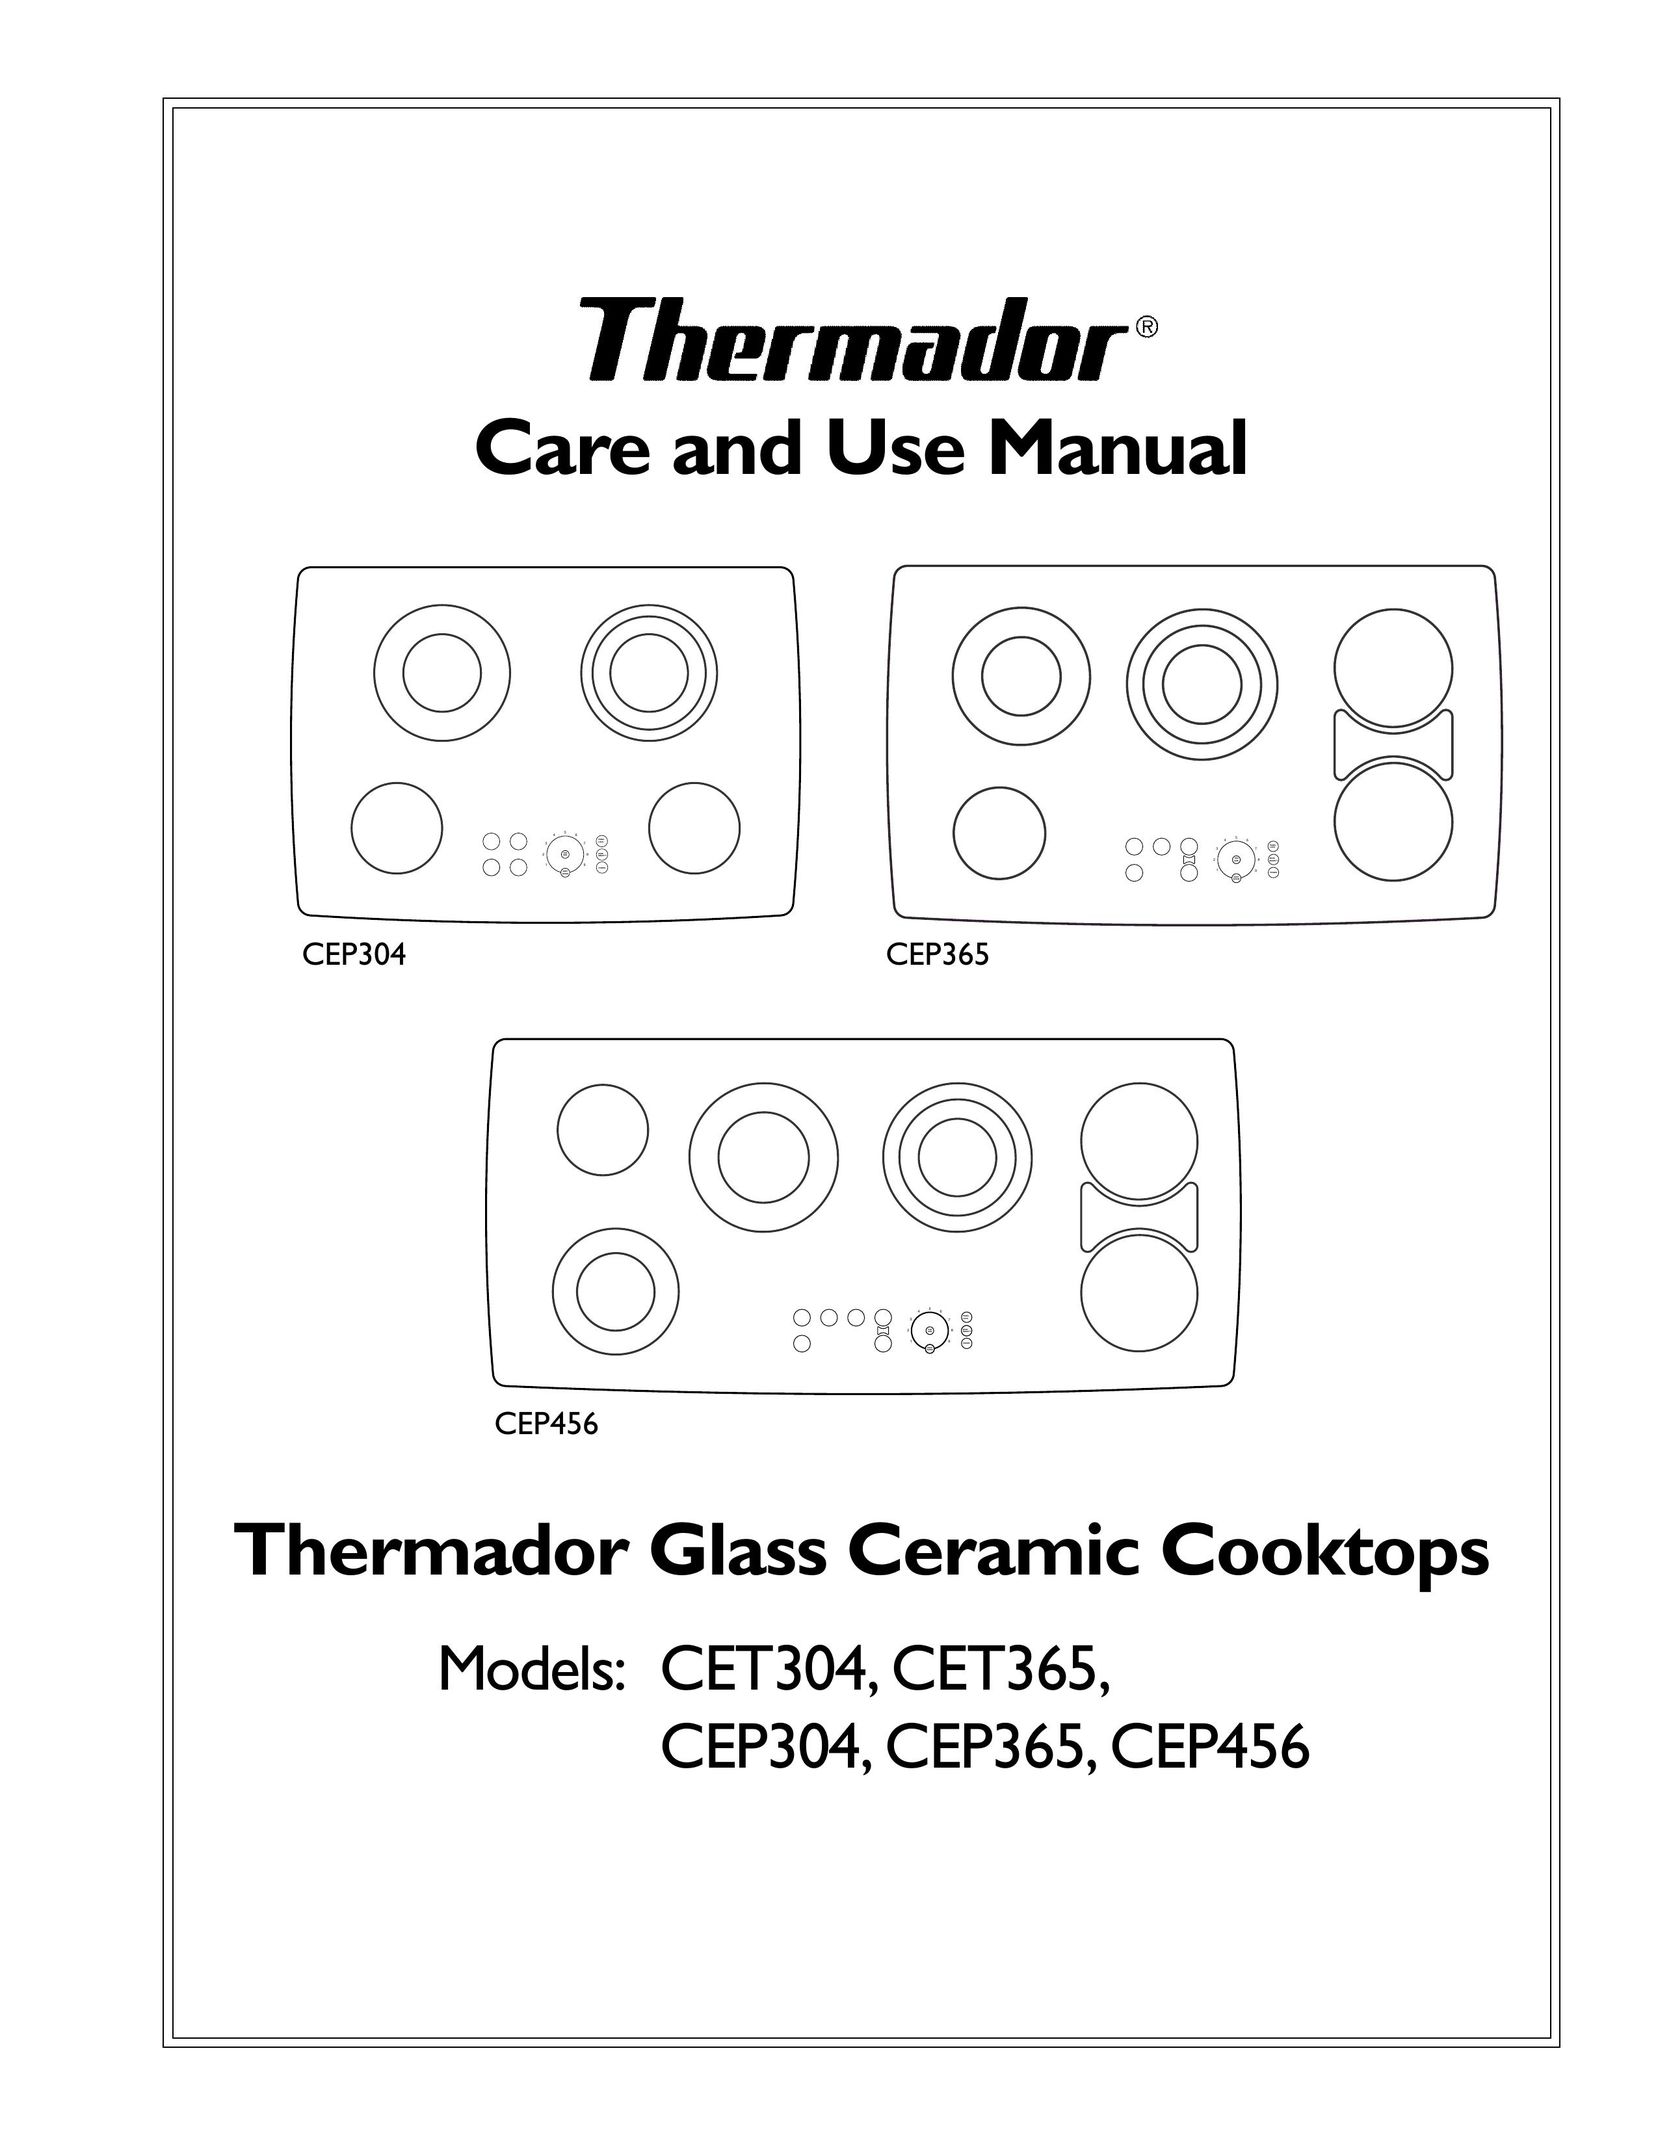 Thermador CEP456 Cooktop User Manual